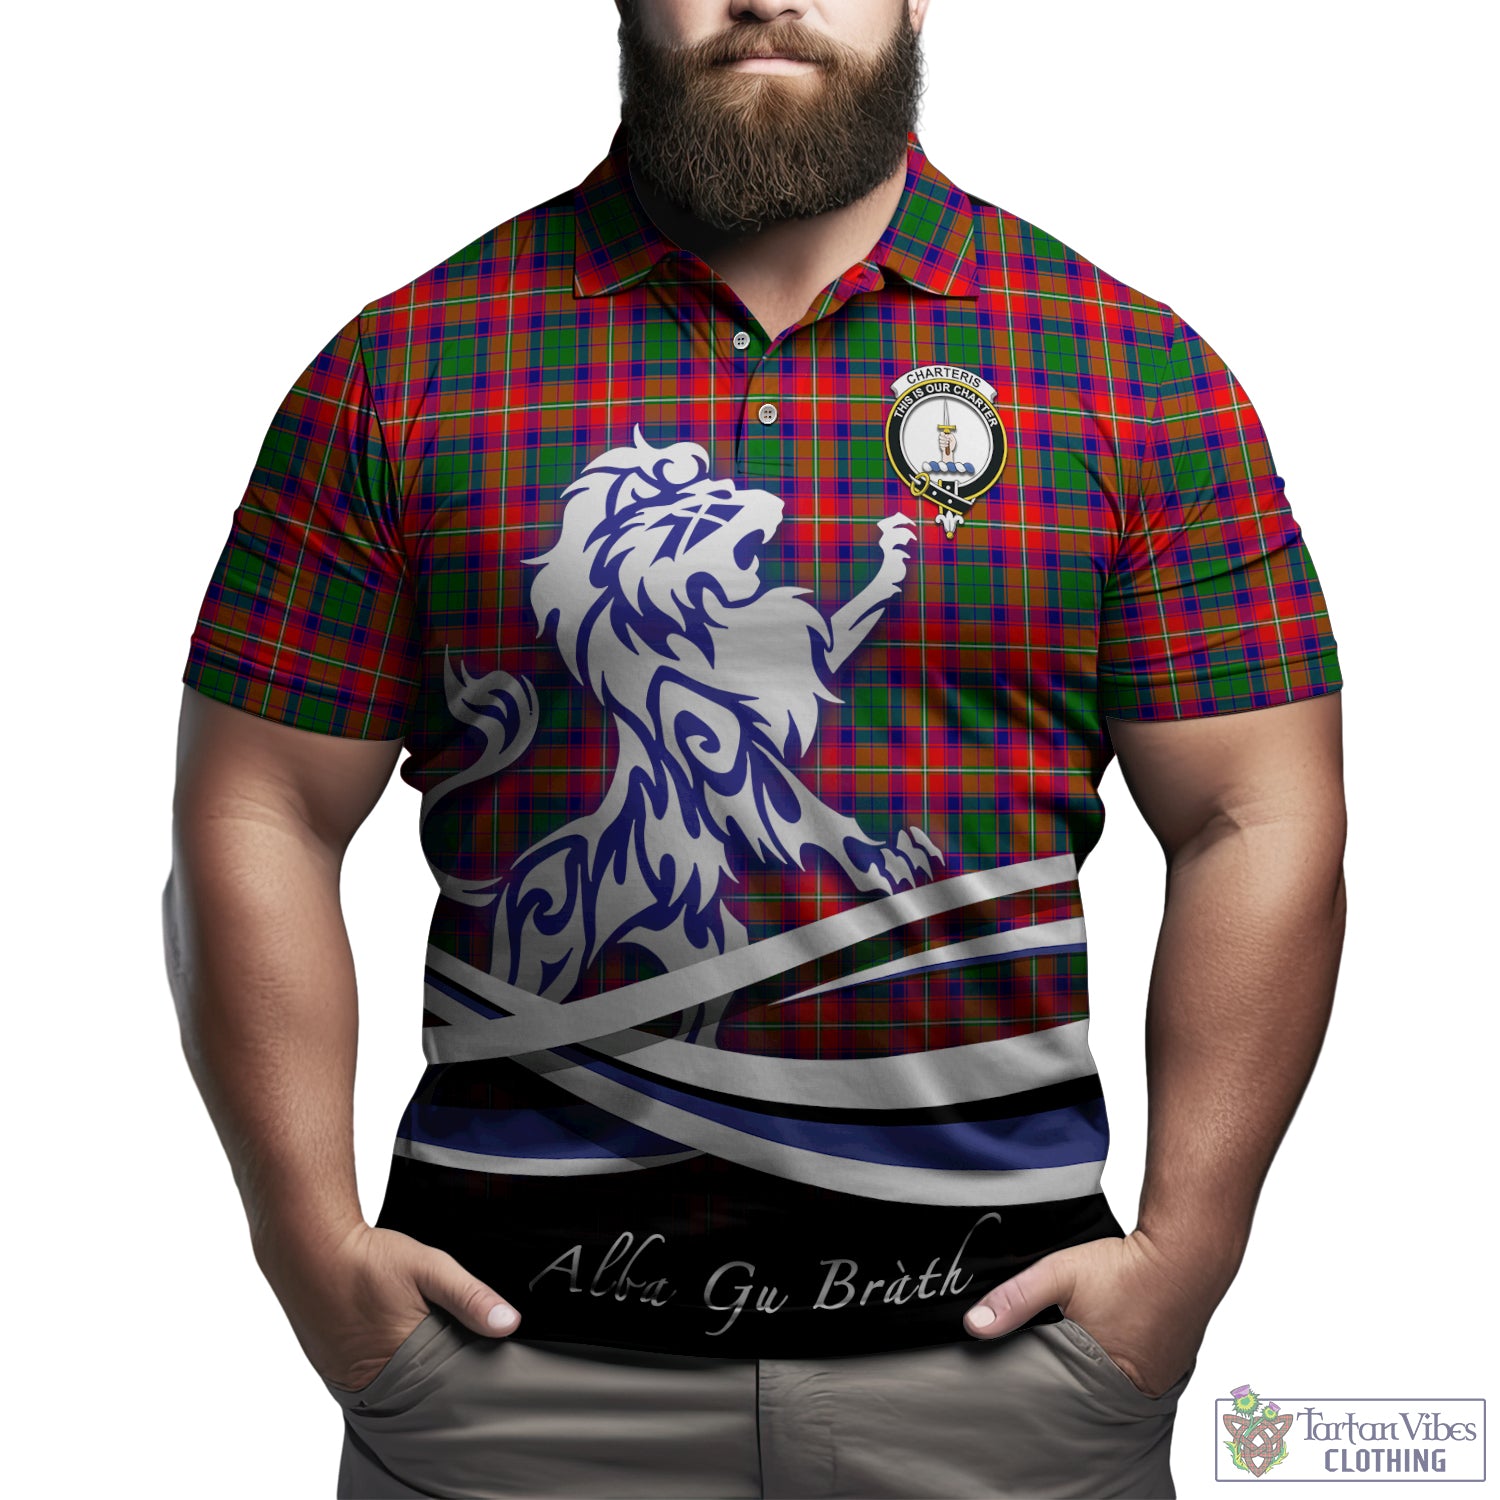 charteris-tartan-polo-shirt-with-alba-gu-brath-regal-lion-emblem